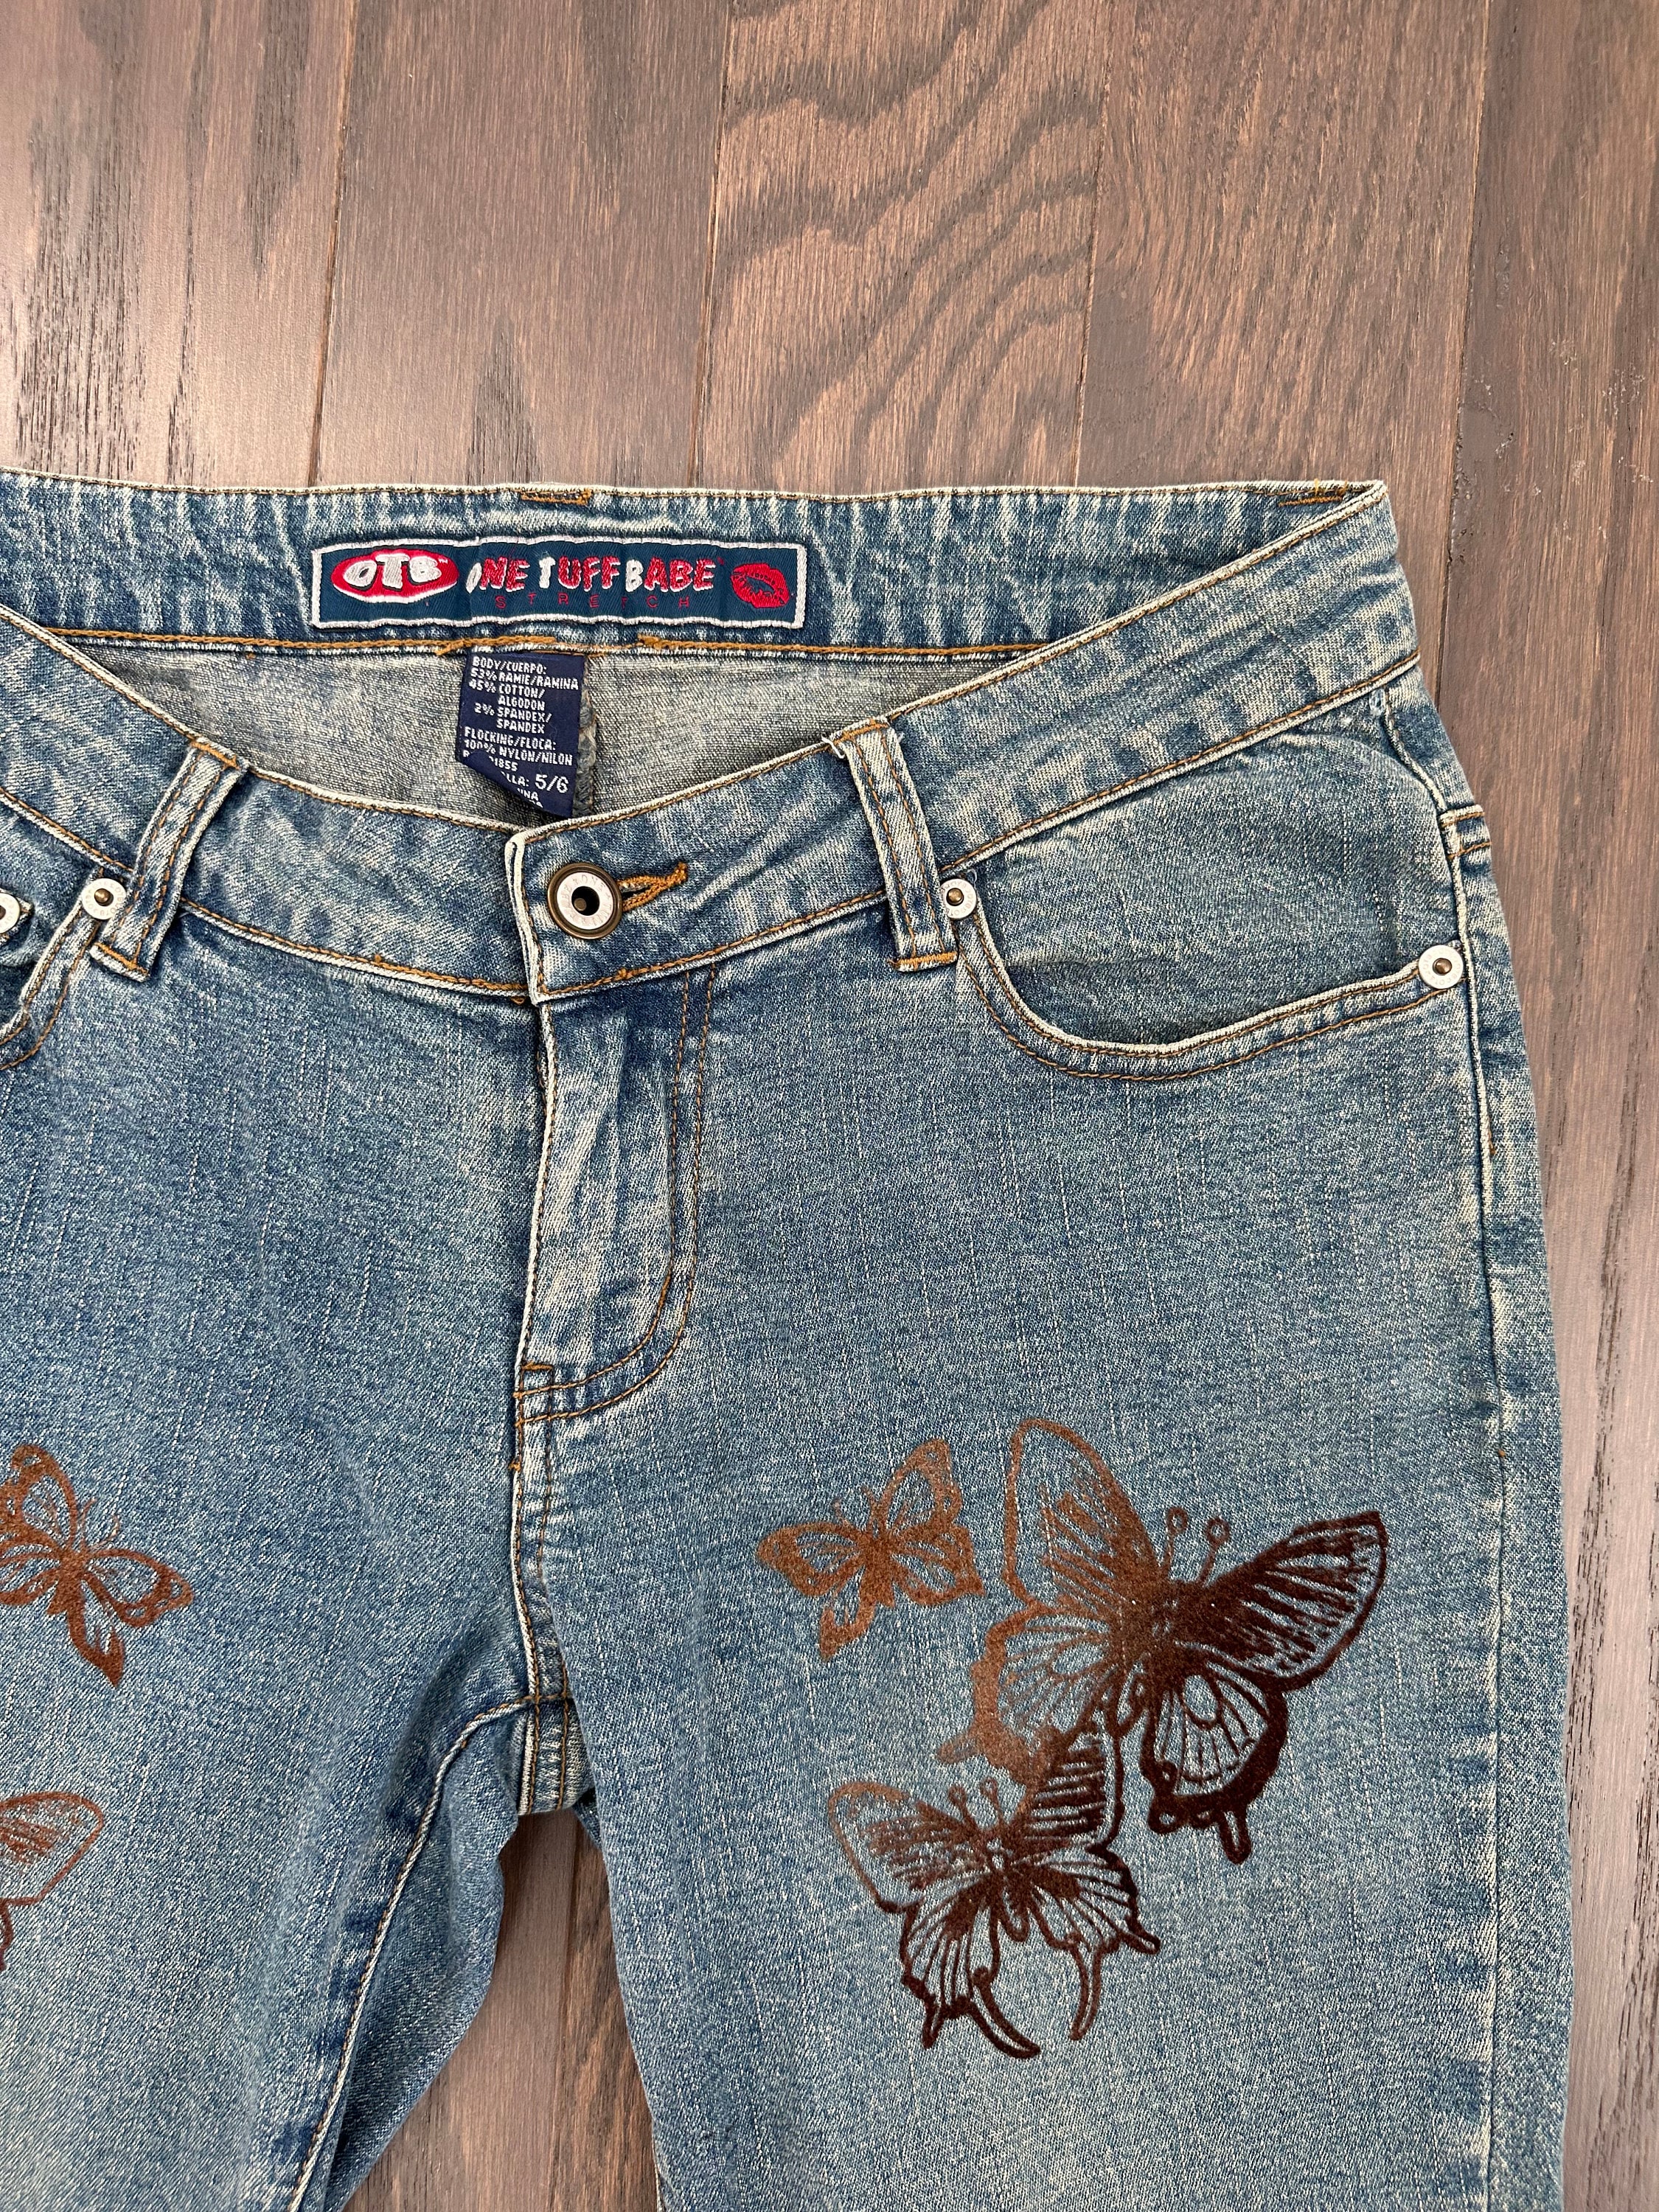 Y2K Butterfly Jeans Vintage Butterfly Flare Jeans Bell Bottom Jeans Y2K Low  Rise Jeans Size 6 Medium 